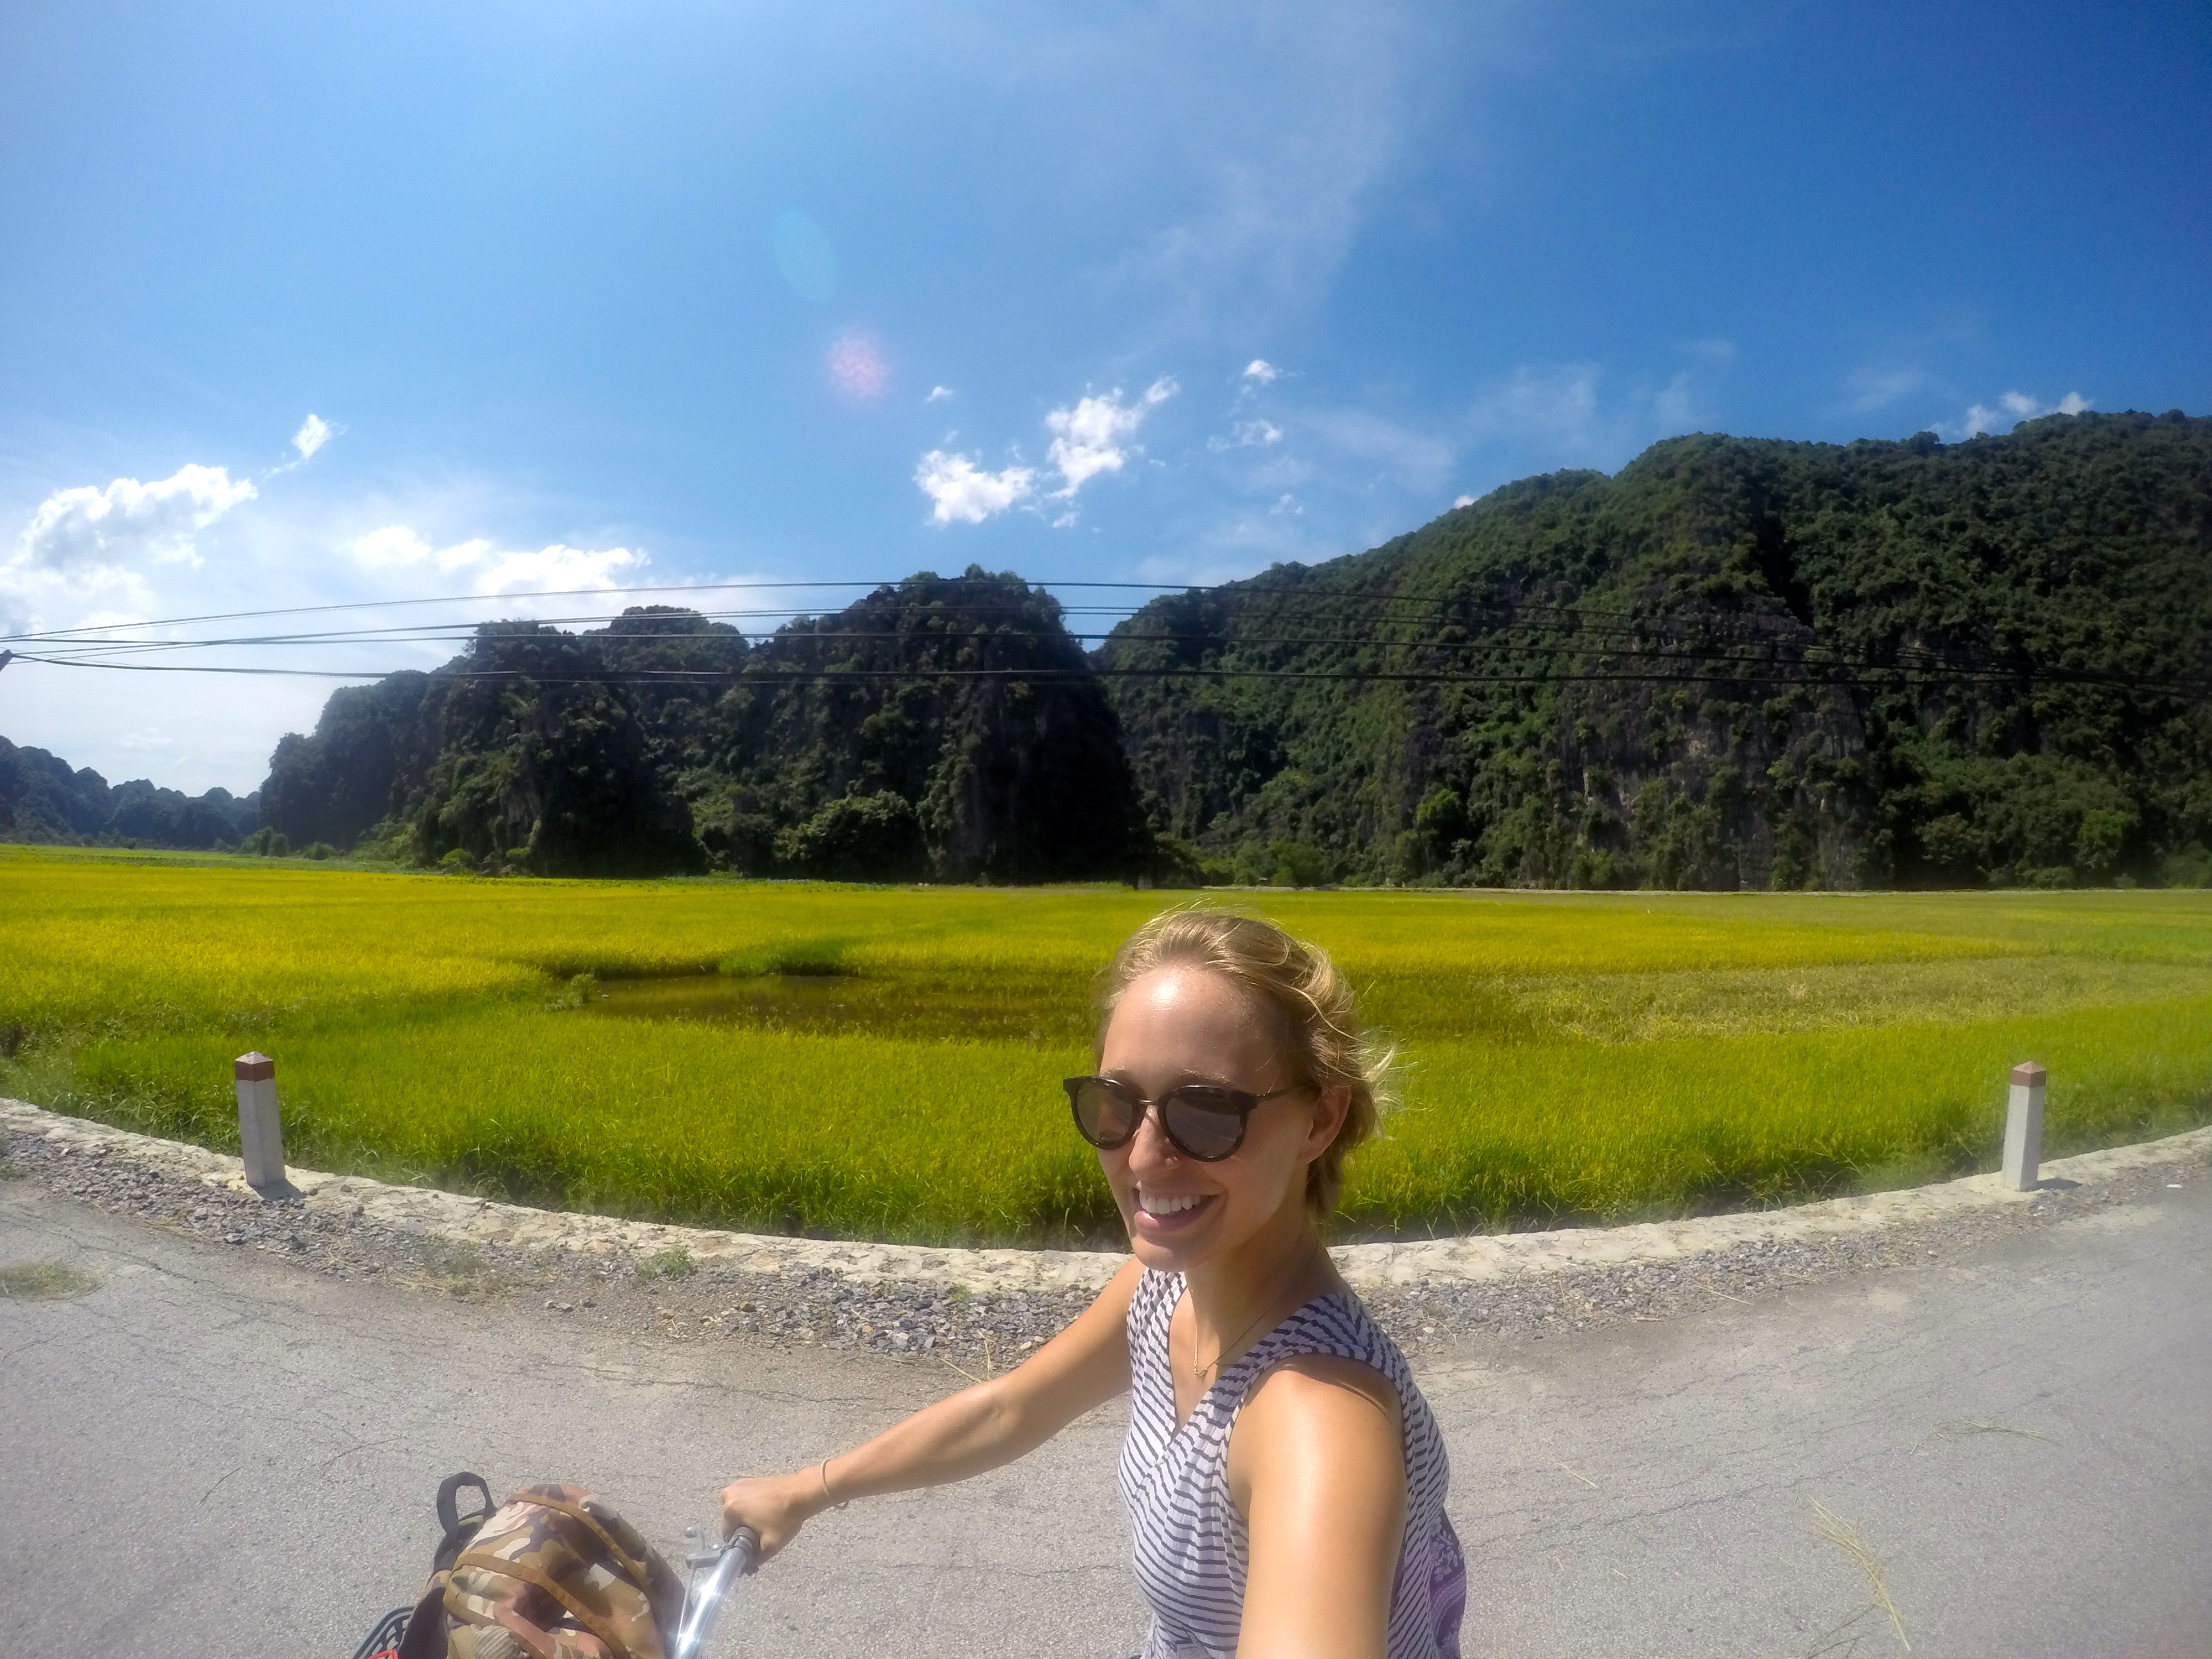 Biking through the rice fields